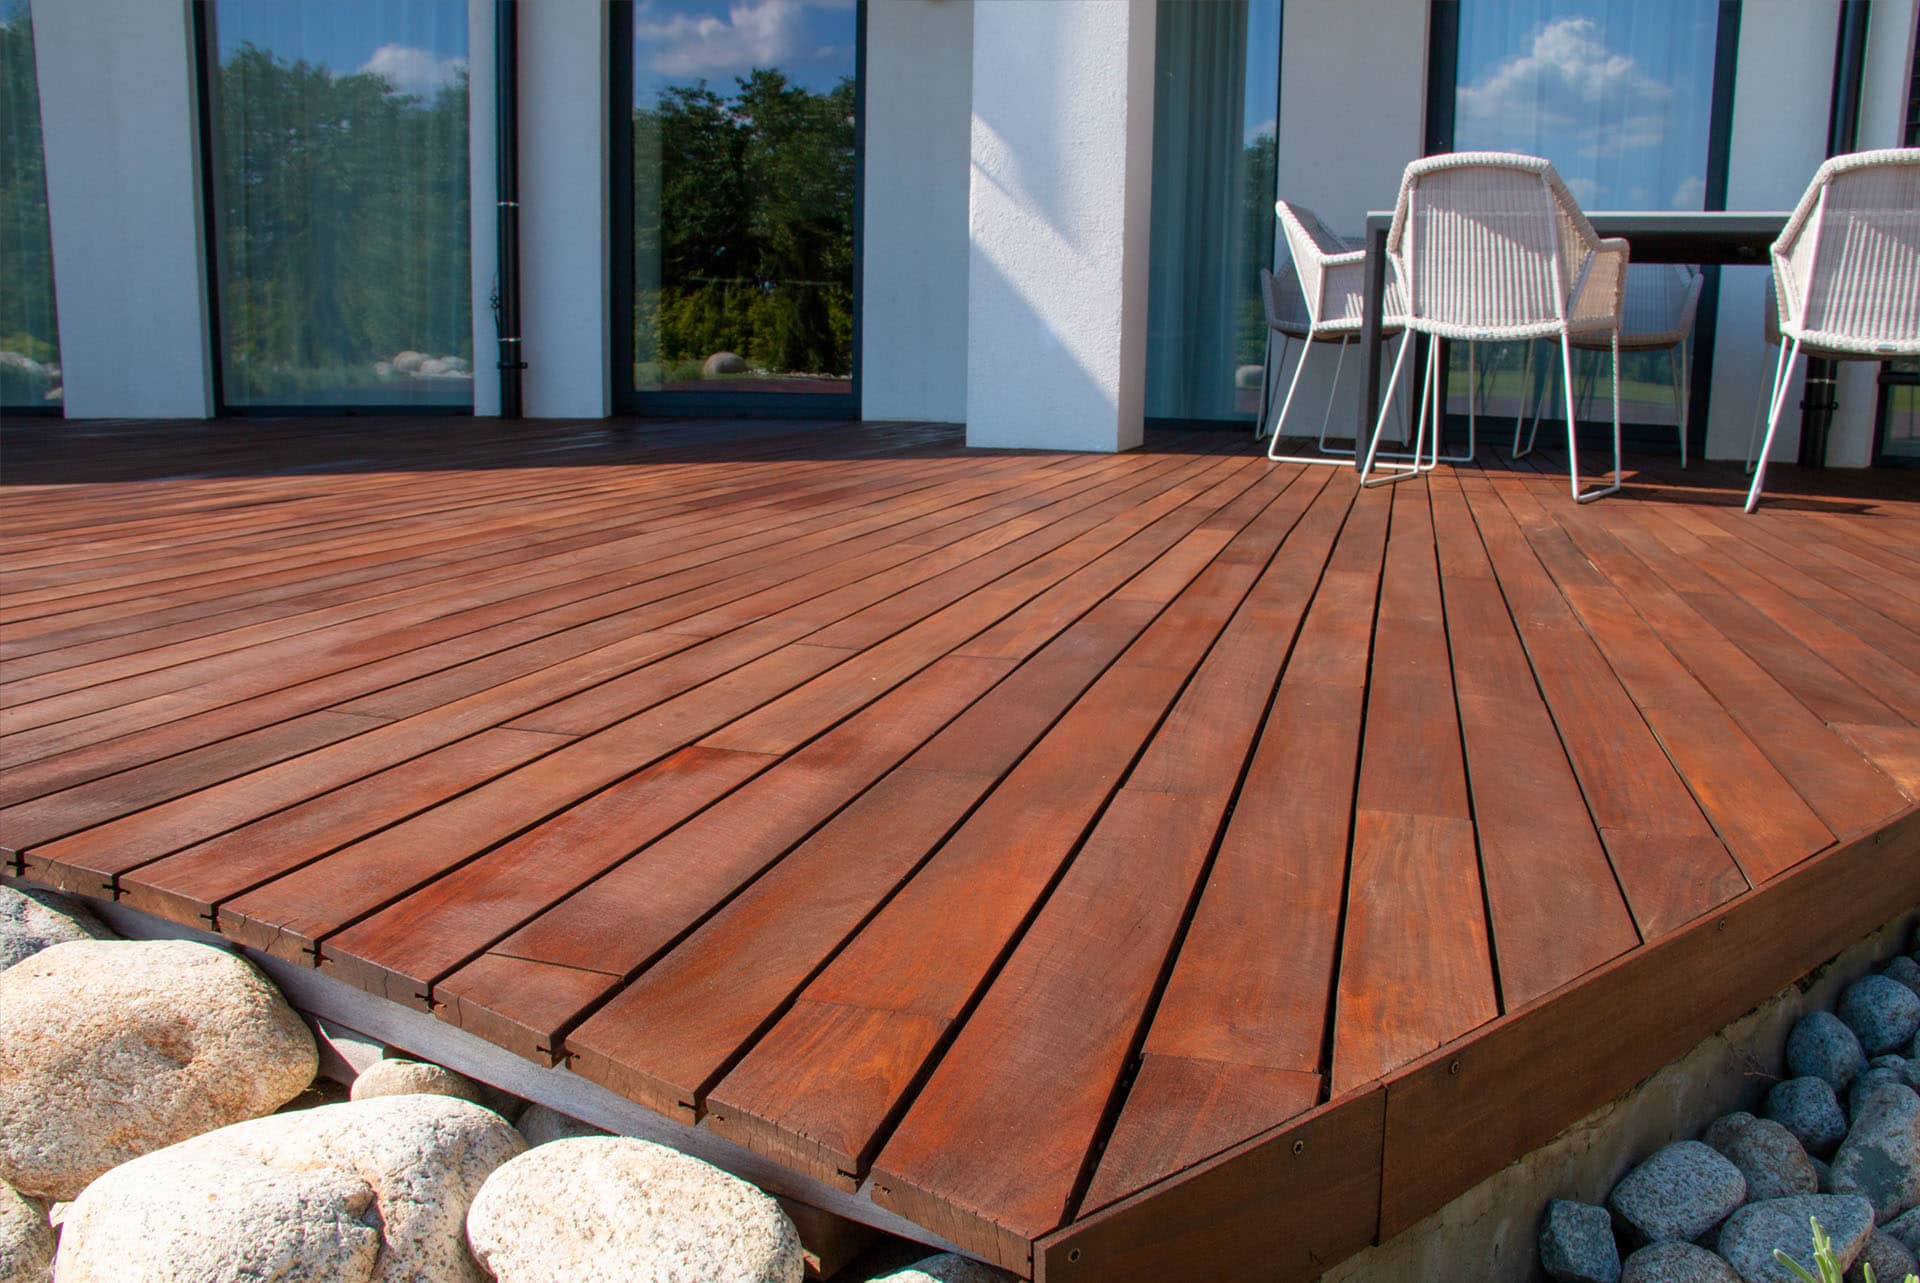 timber-decking-wooden-deck-boards-hardwood-pressure-treated-smooth-dark-wood-patio